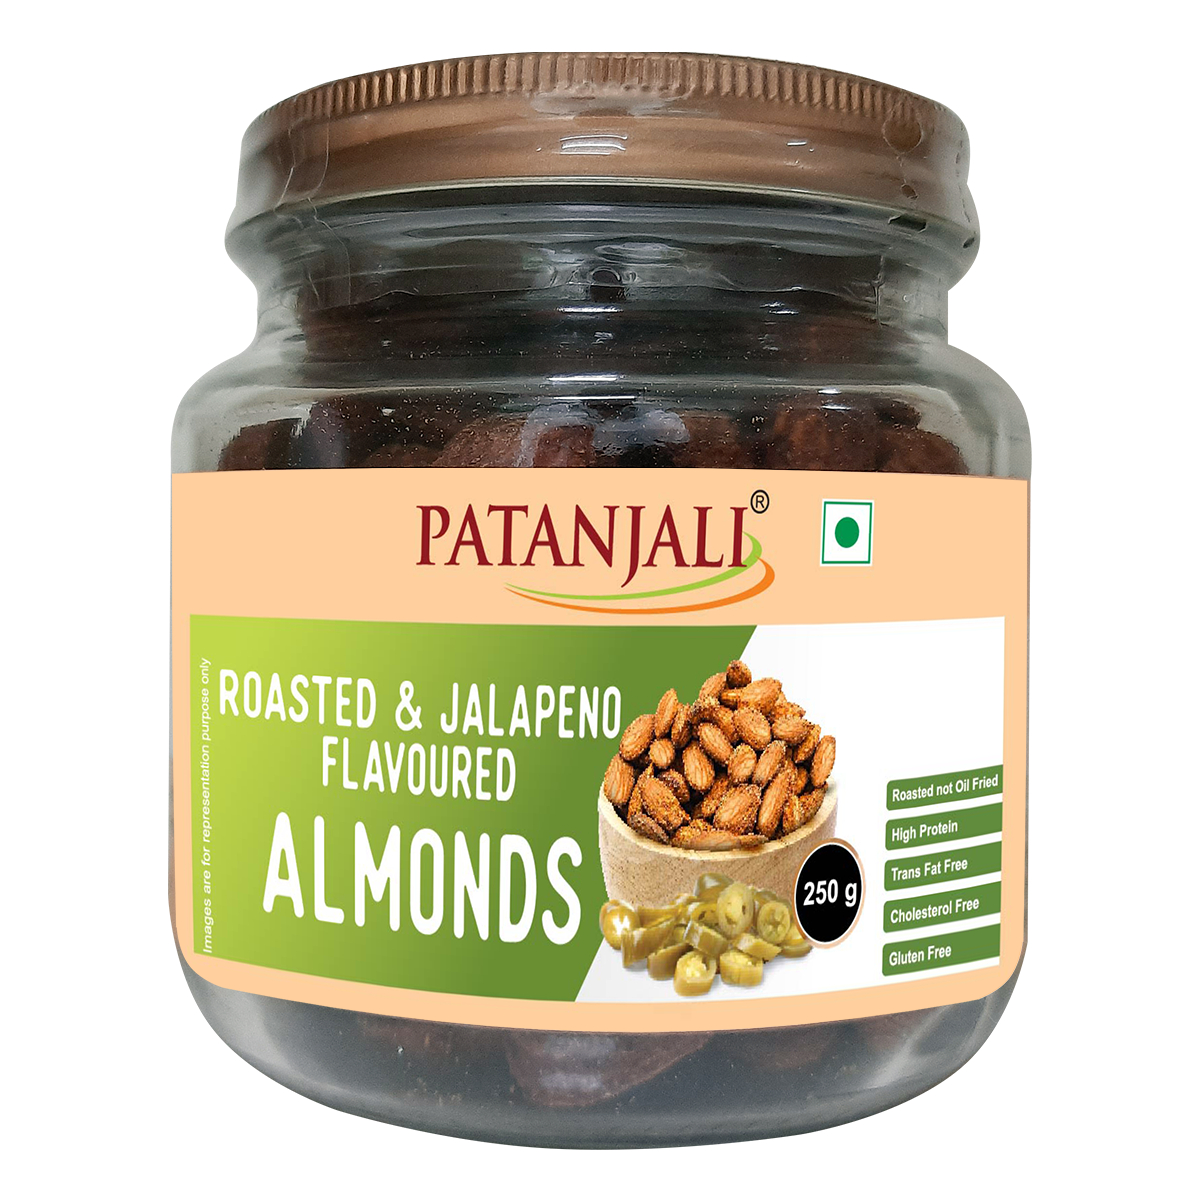 Roasted & Jalapeno Flavor Almonds